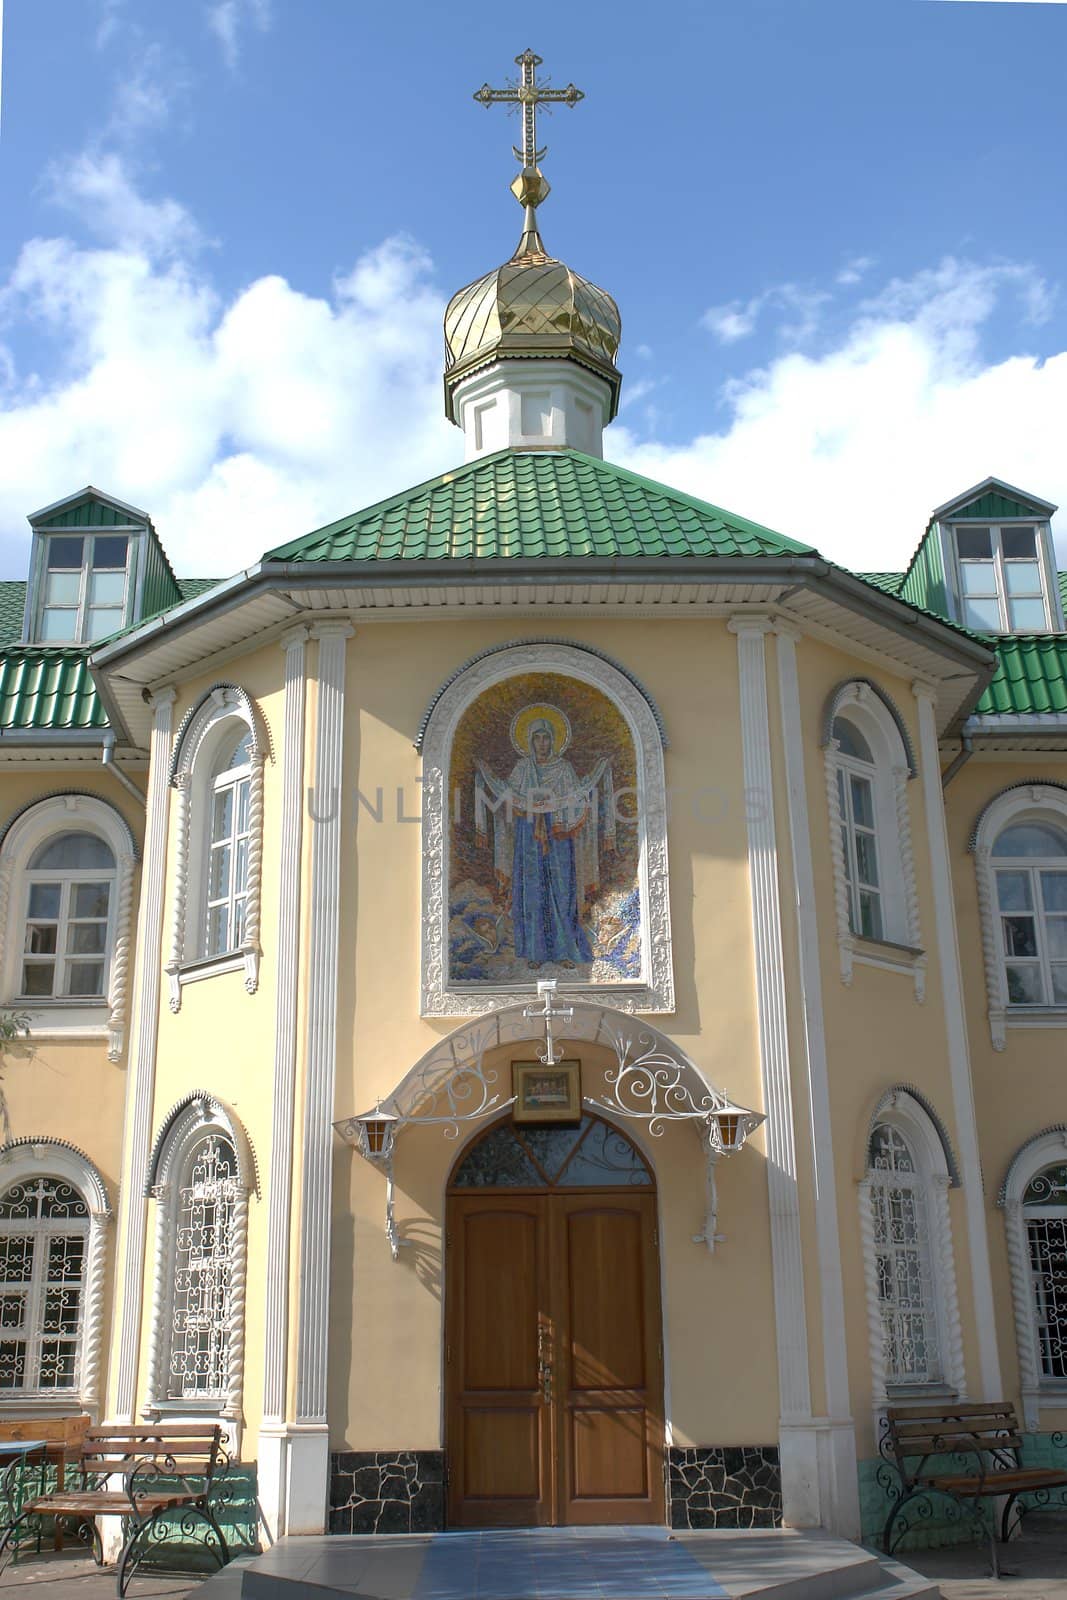 Piously-Pokrovsk female monastery of Krivoi Rog, Ukraine